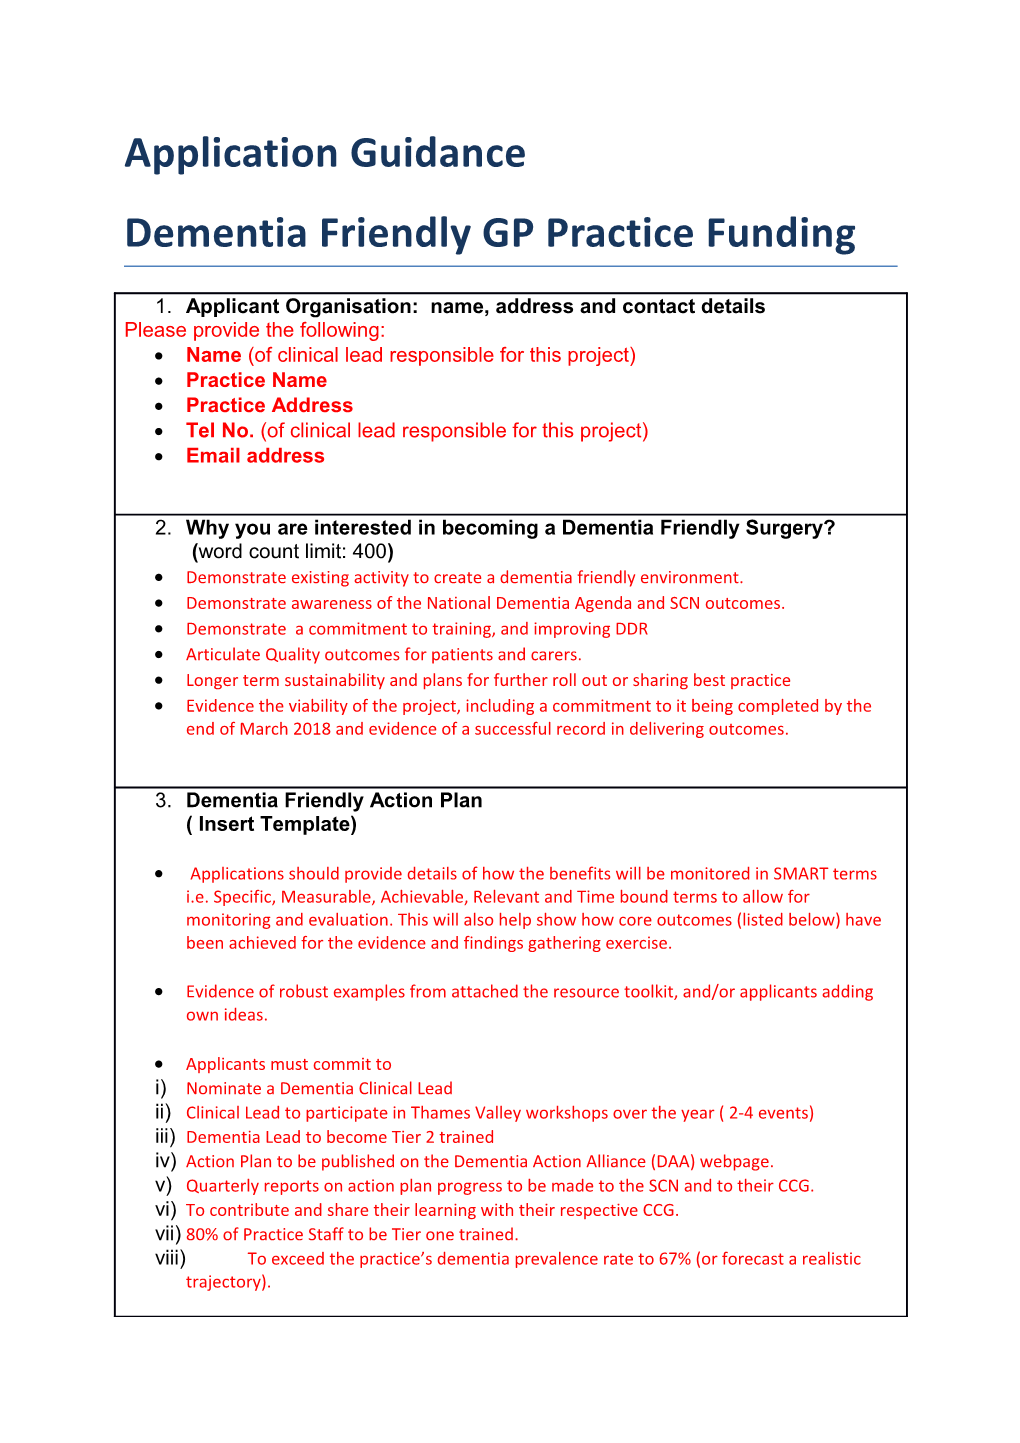 Dementia Friendly GP Practice Funding